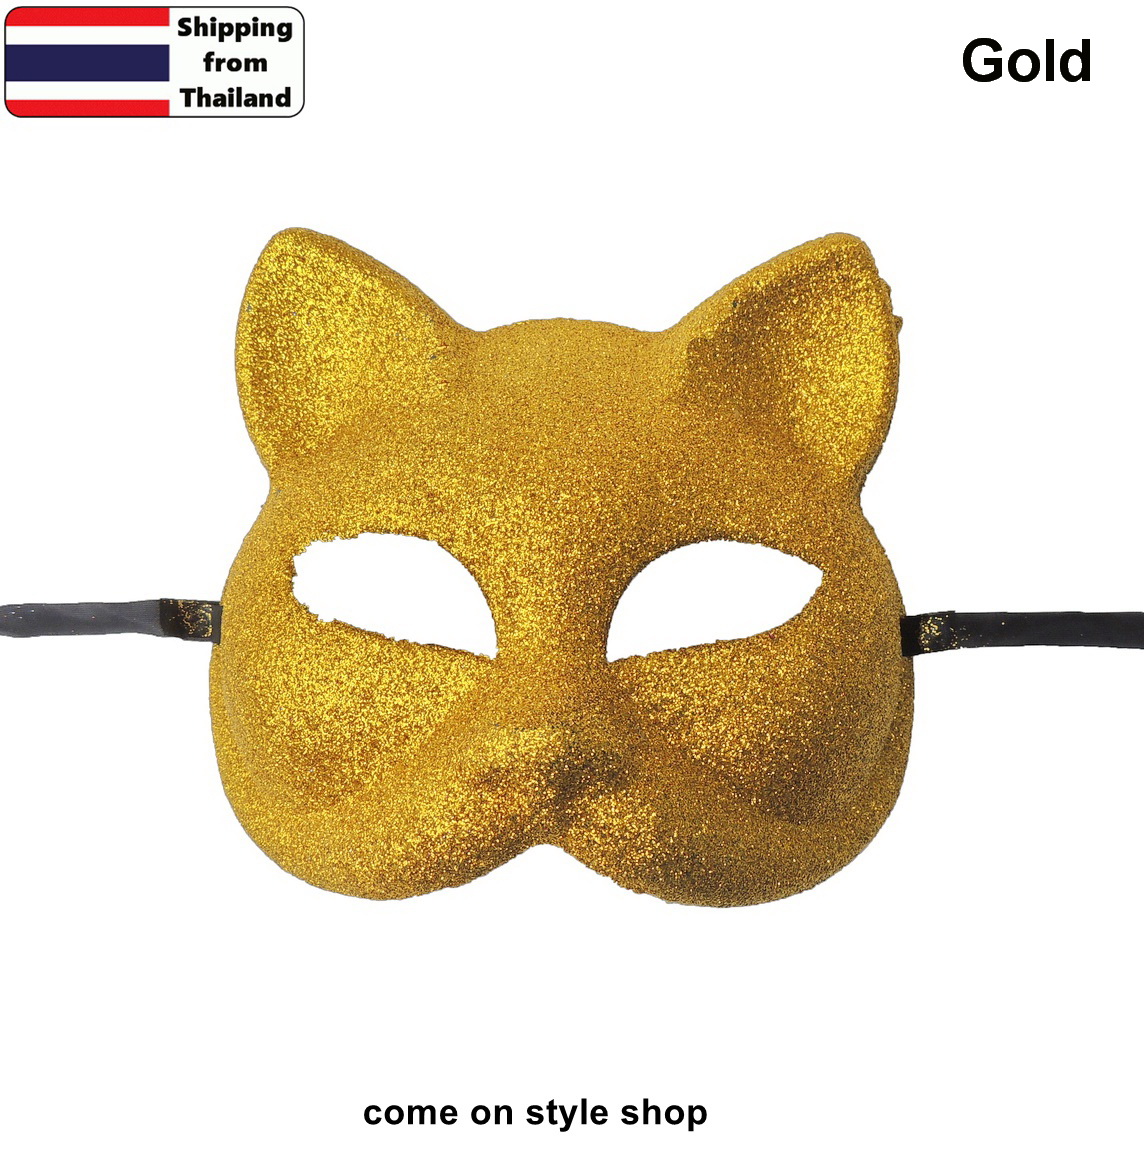 come on style shop หน้ากากแมวเหมียวเซ็กซี่ครึ่งหน้า ประดับกากเพชร หน้ากากแมวแฟนซี ออกงาน ปาร์ตี้ การแสดง